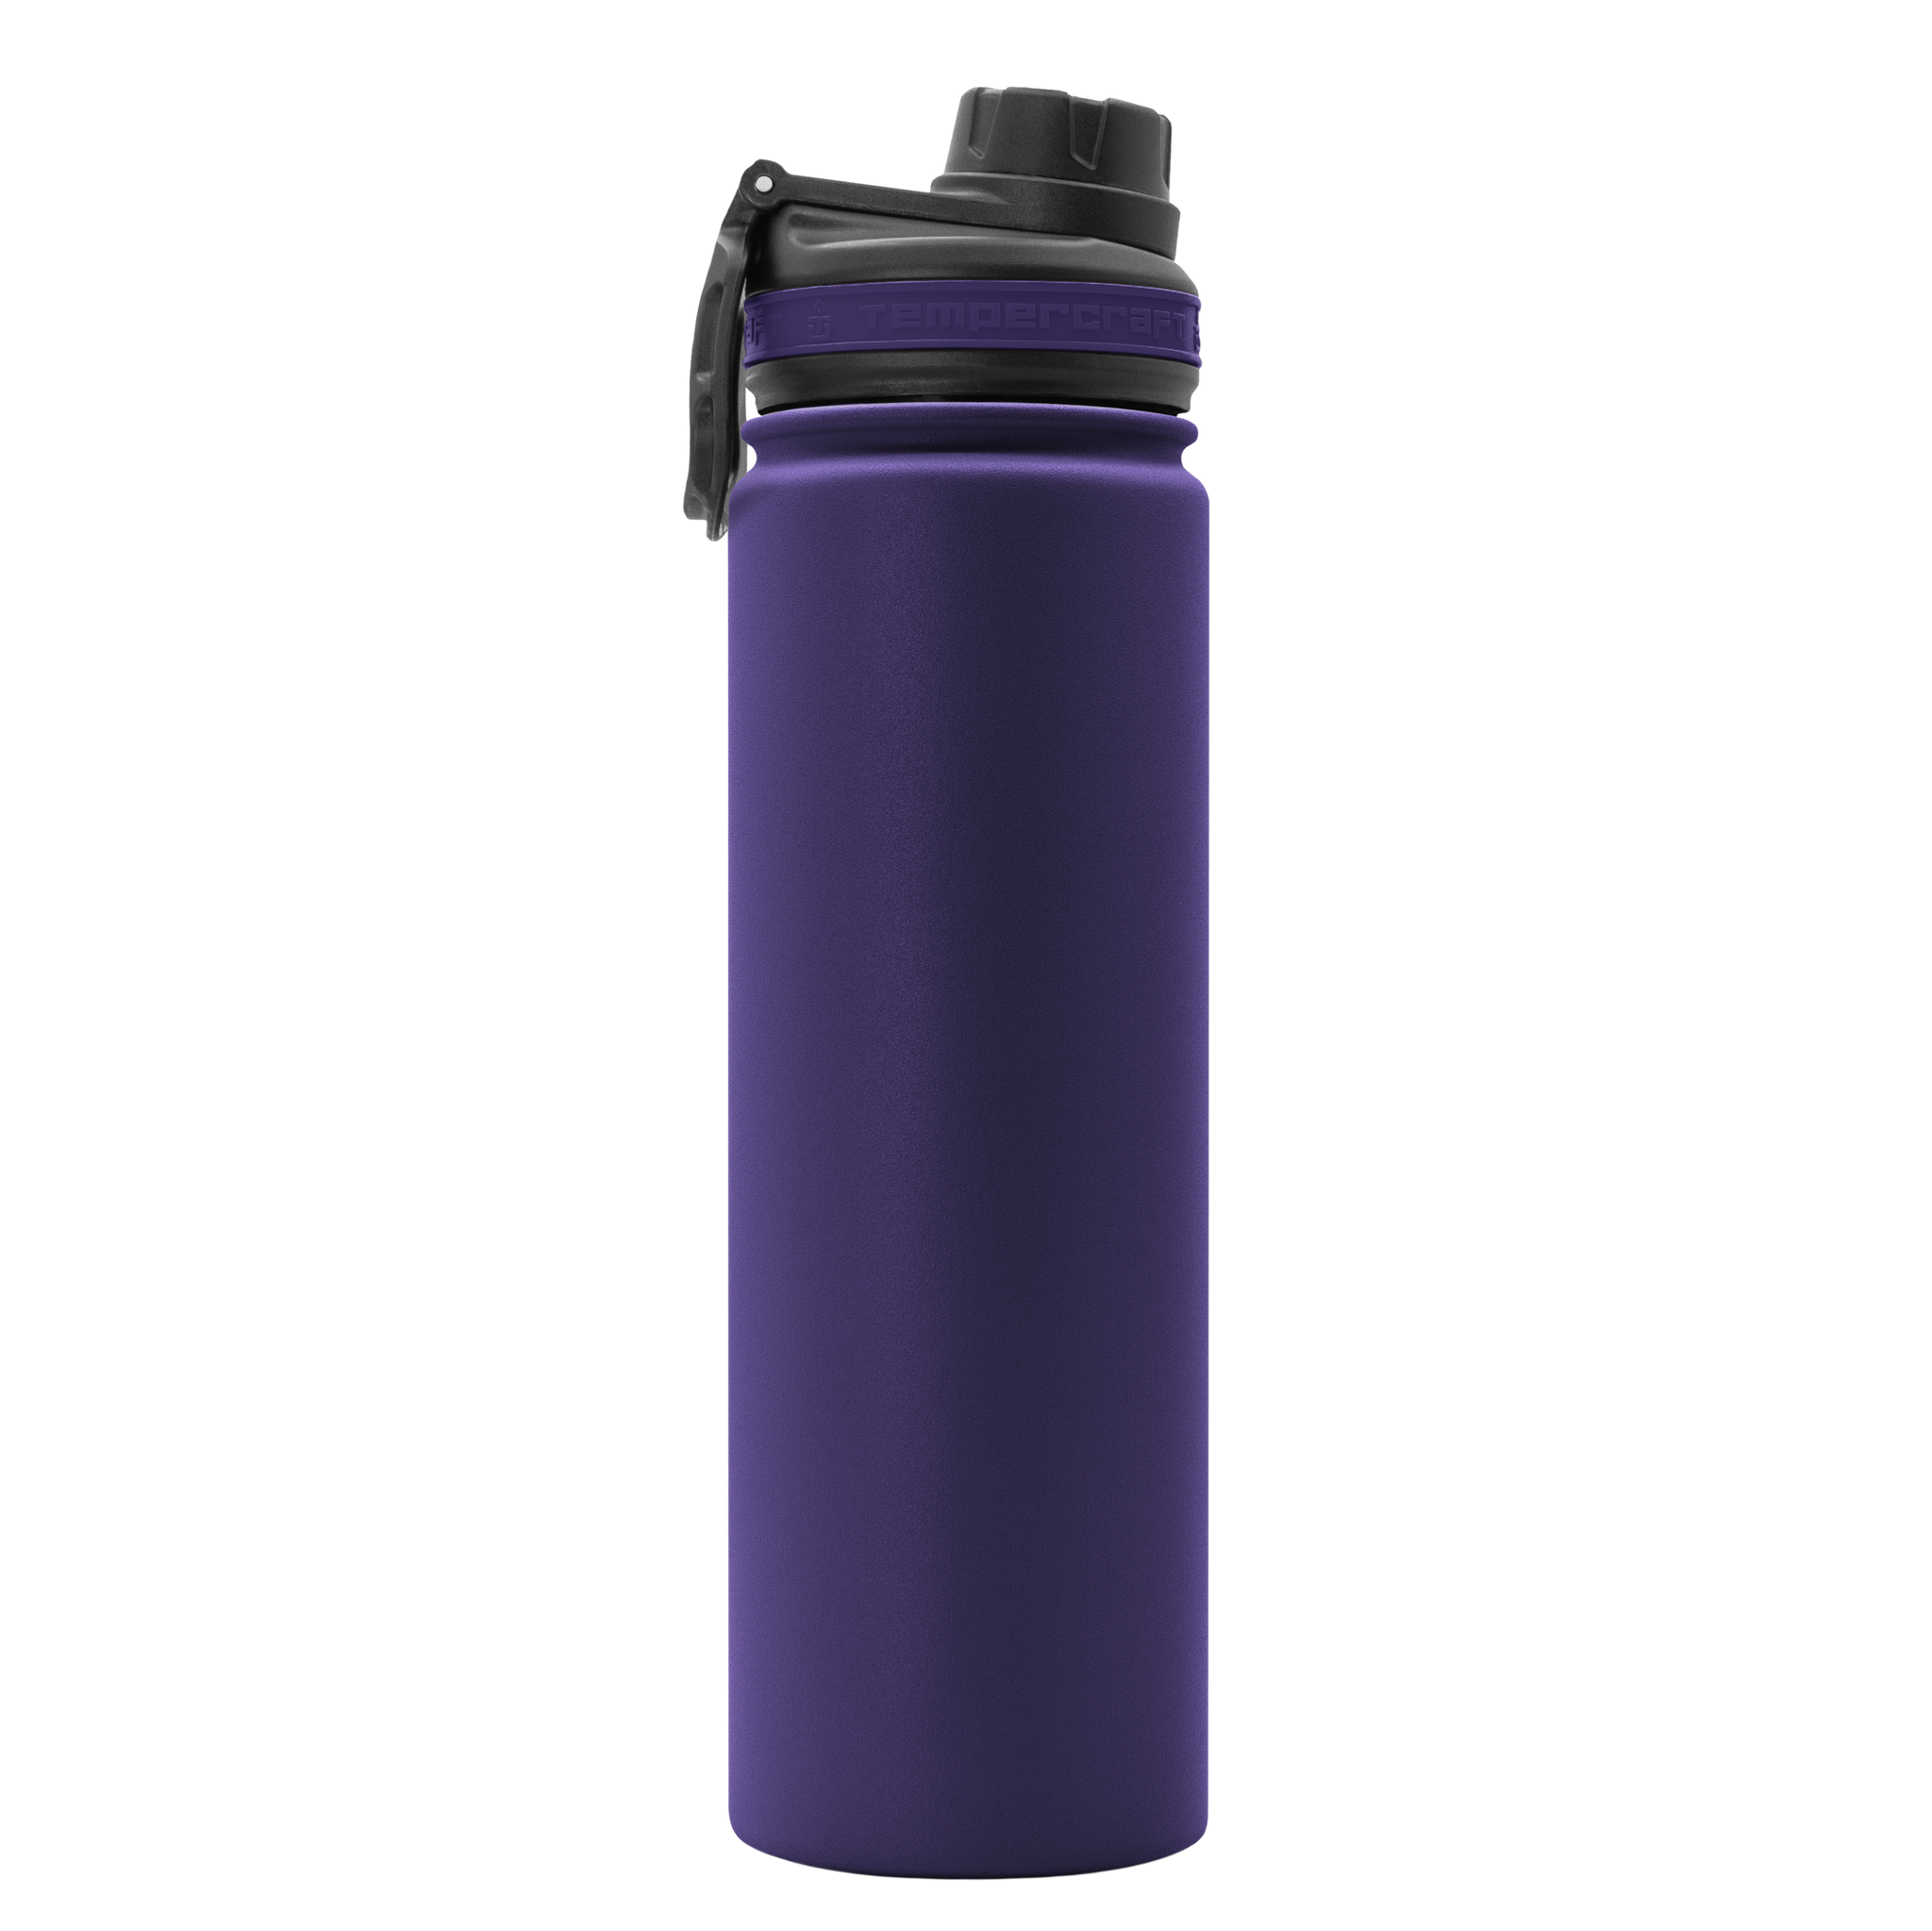 Go Flip Straw Water Bottle, 22 OZ, Insulated Bottle